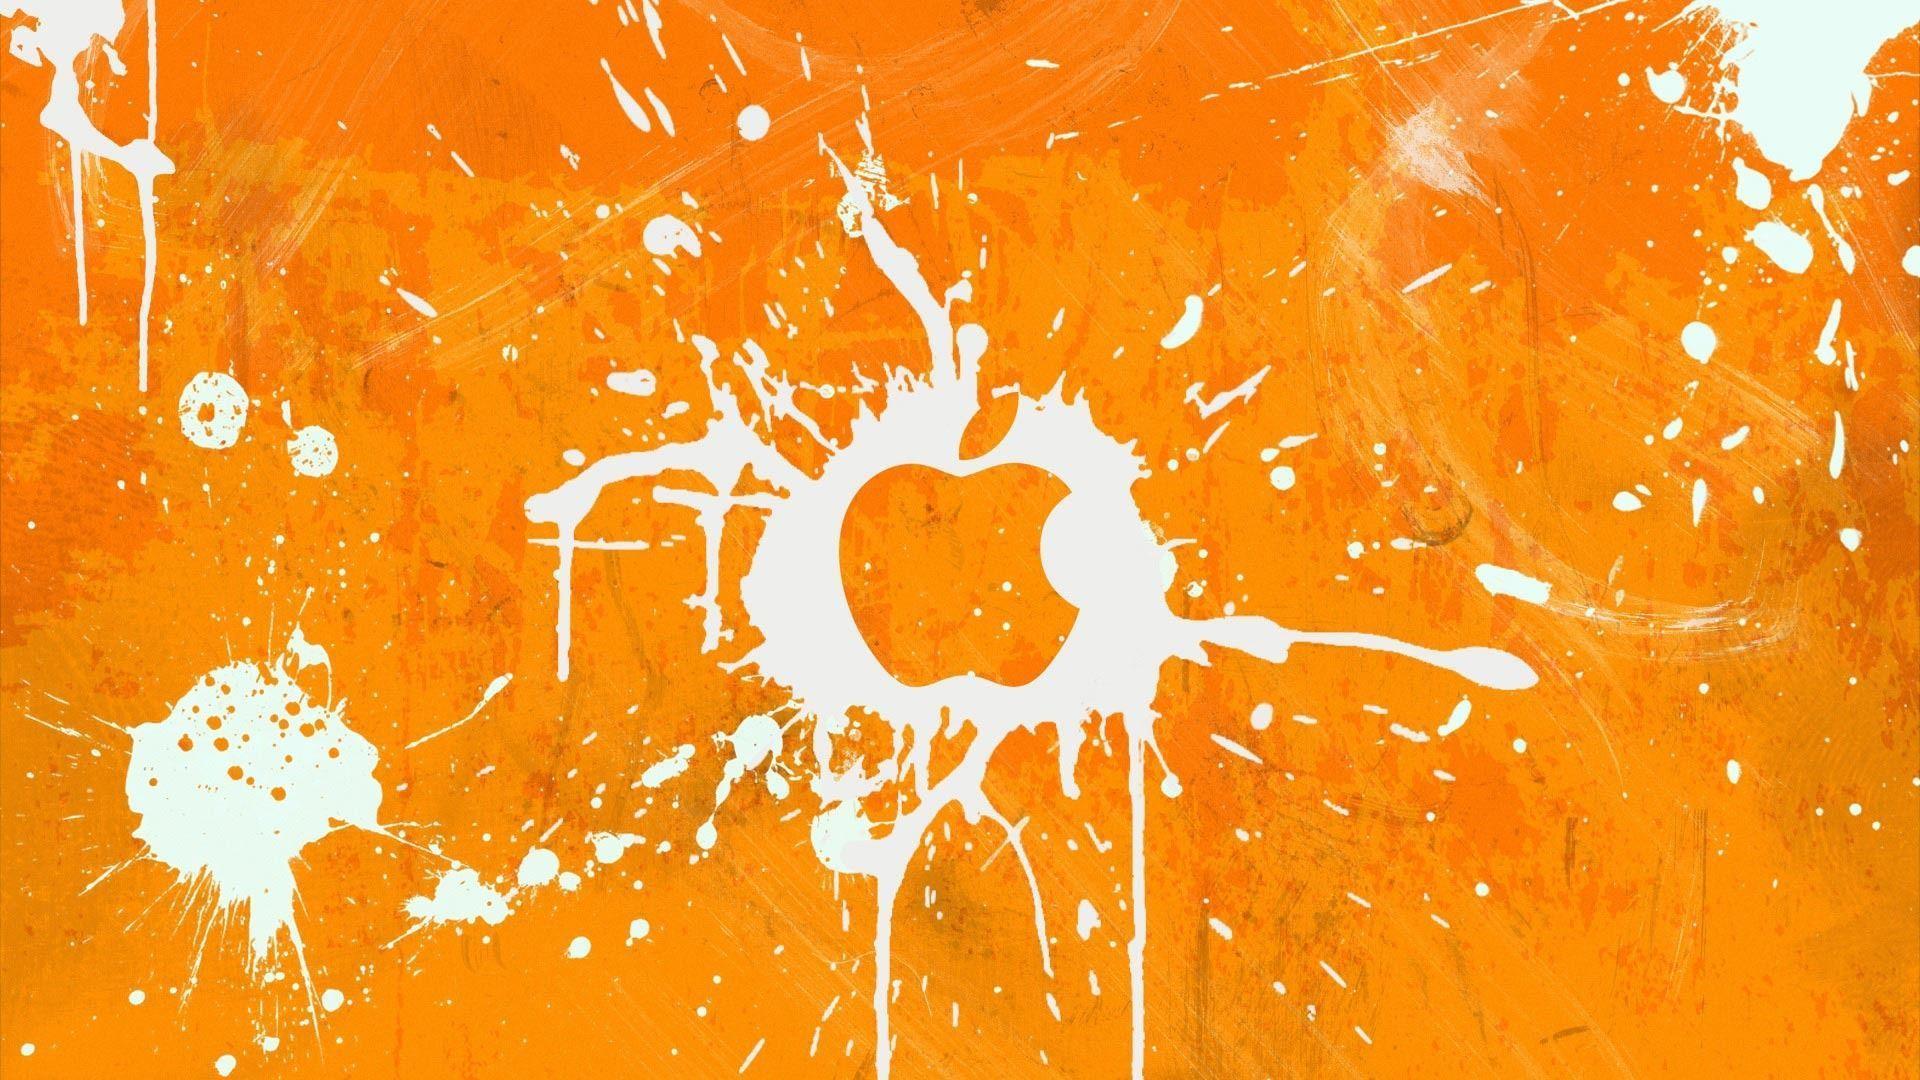 Orange Apple logo Wallpaper. High Quality Wallpaper